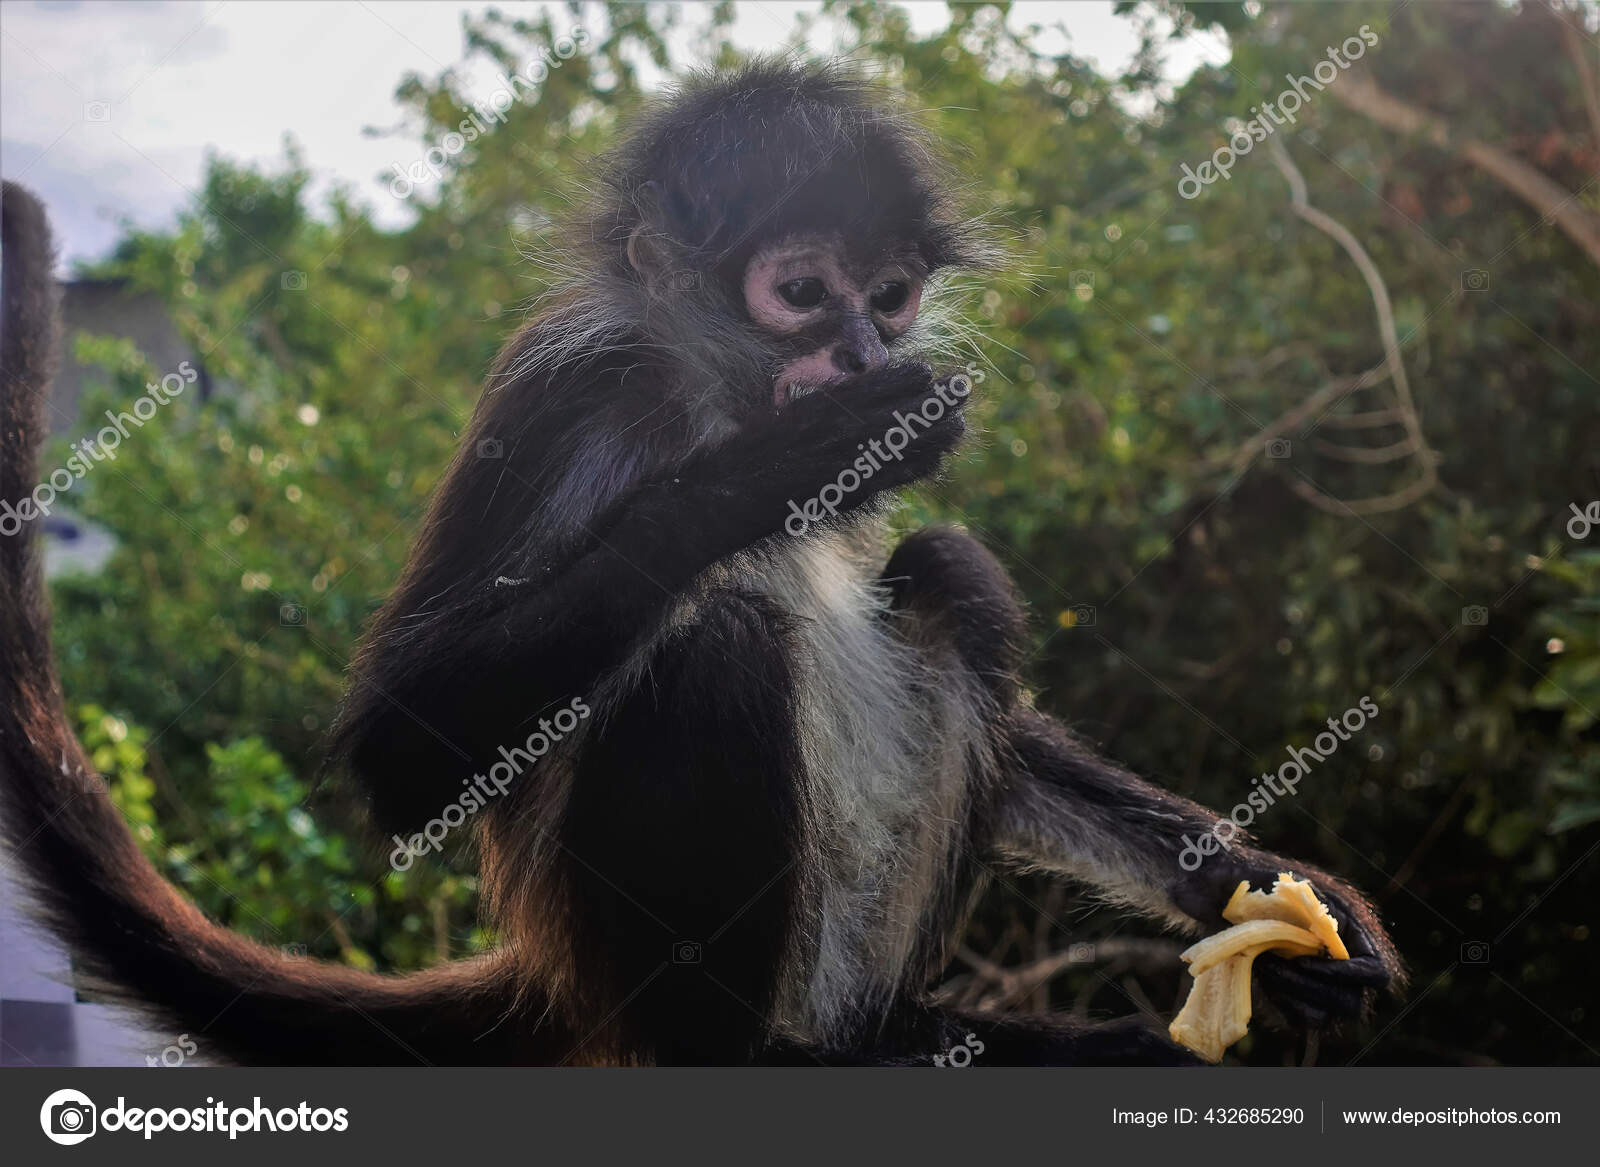 https://st2.depositphotos.com/34590254/43268/i/1600/depositphotos_432685290-stock-photo-small-spider-monkey-eating-banana.jpg